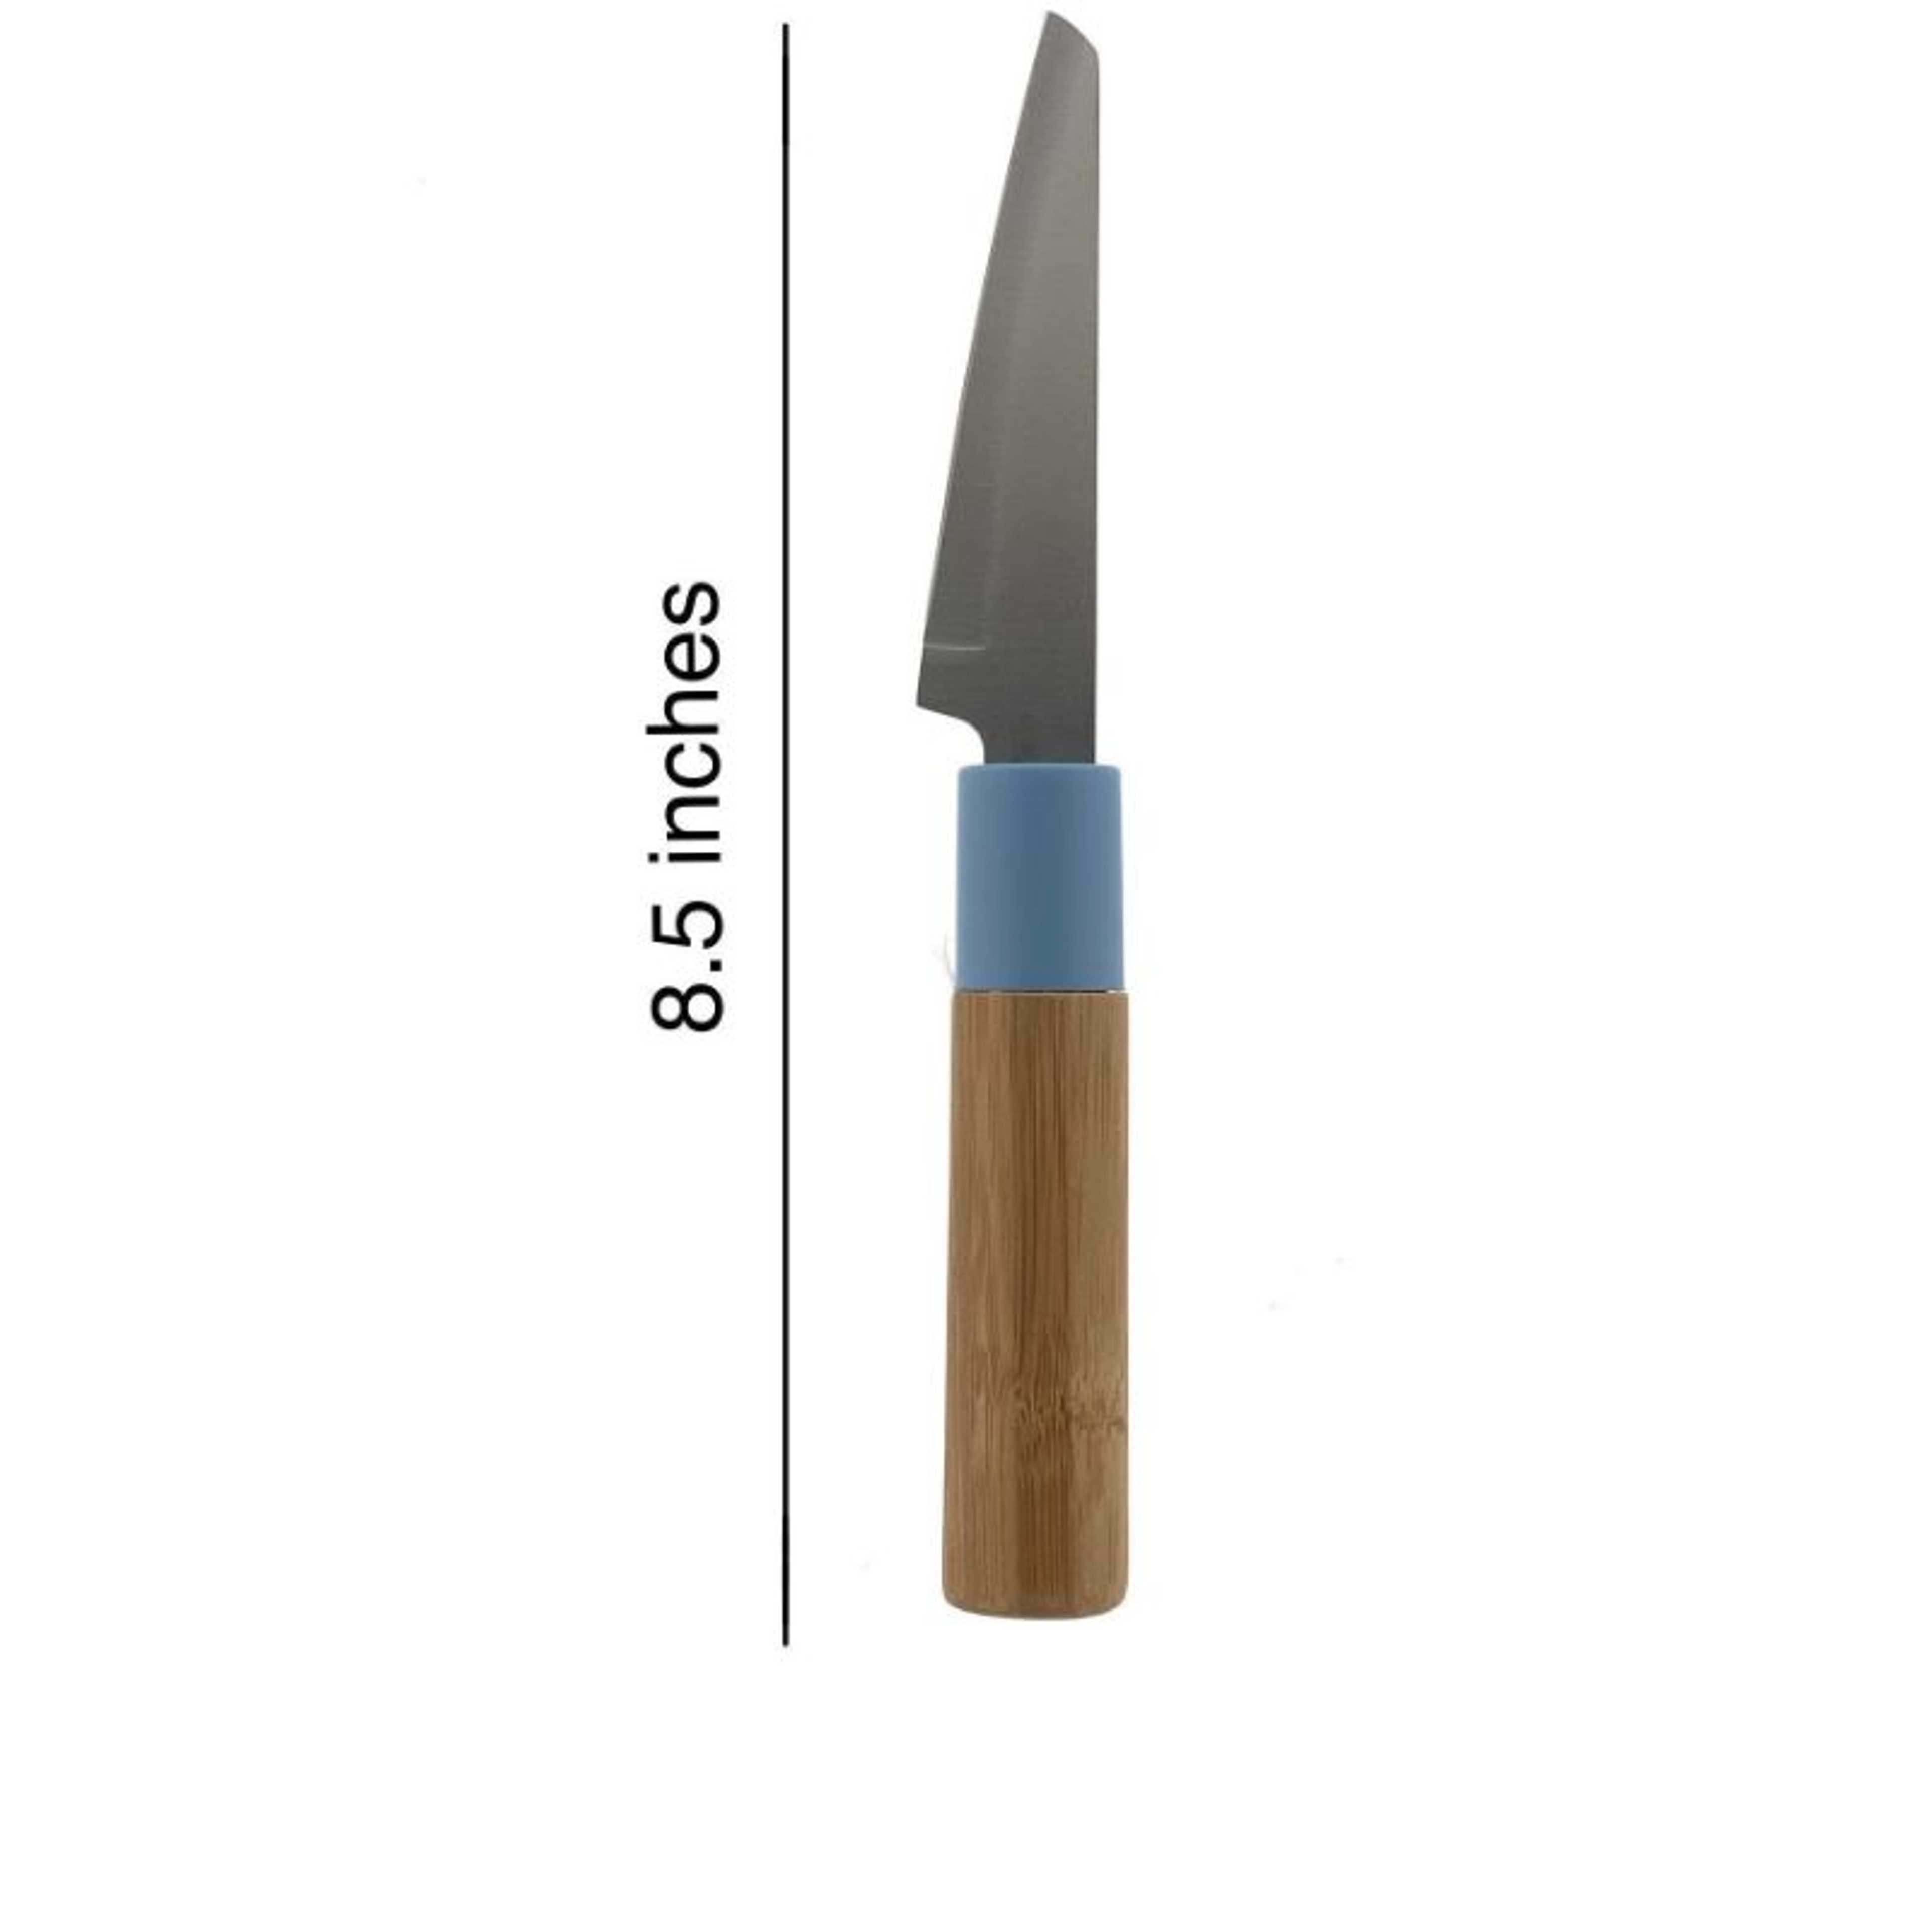 J&T Stainless Steel Paring Knife (SK-1438)